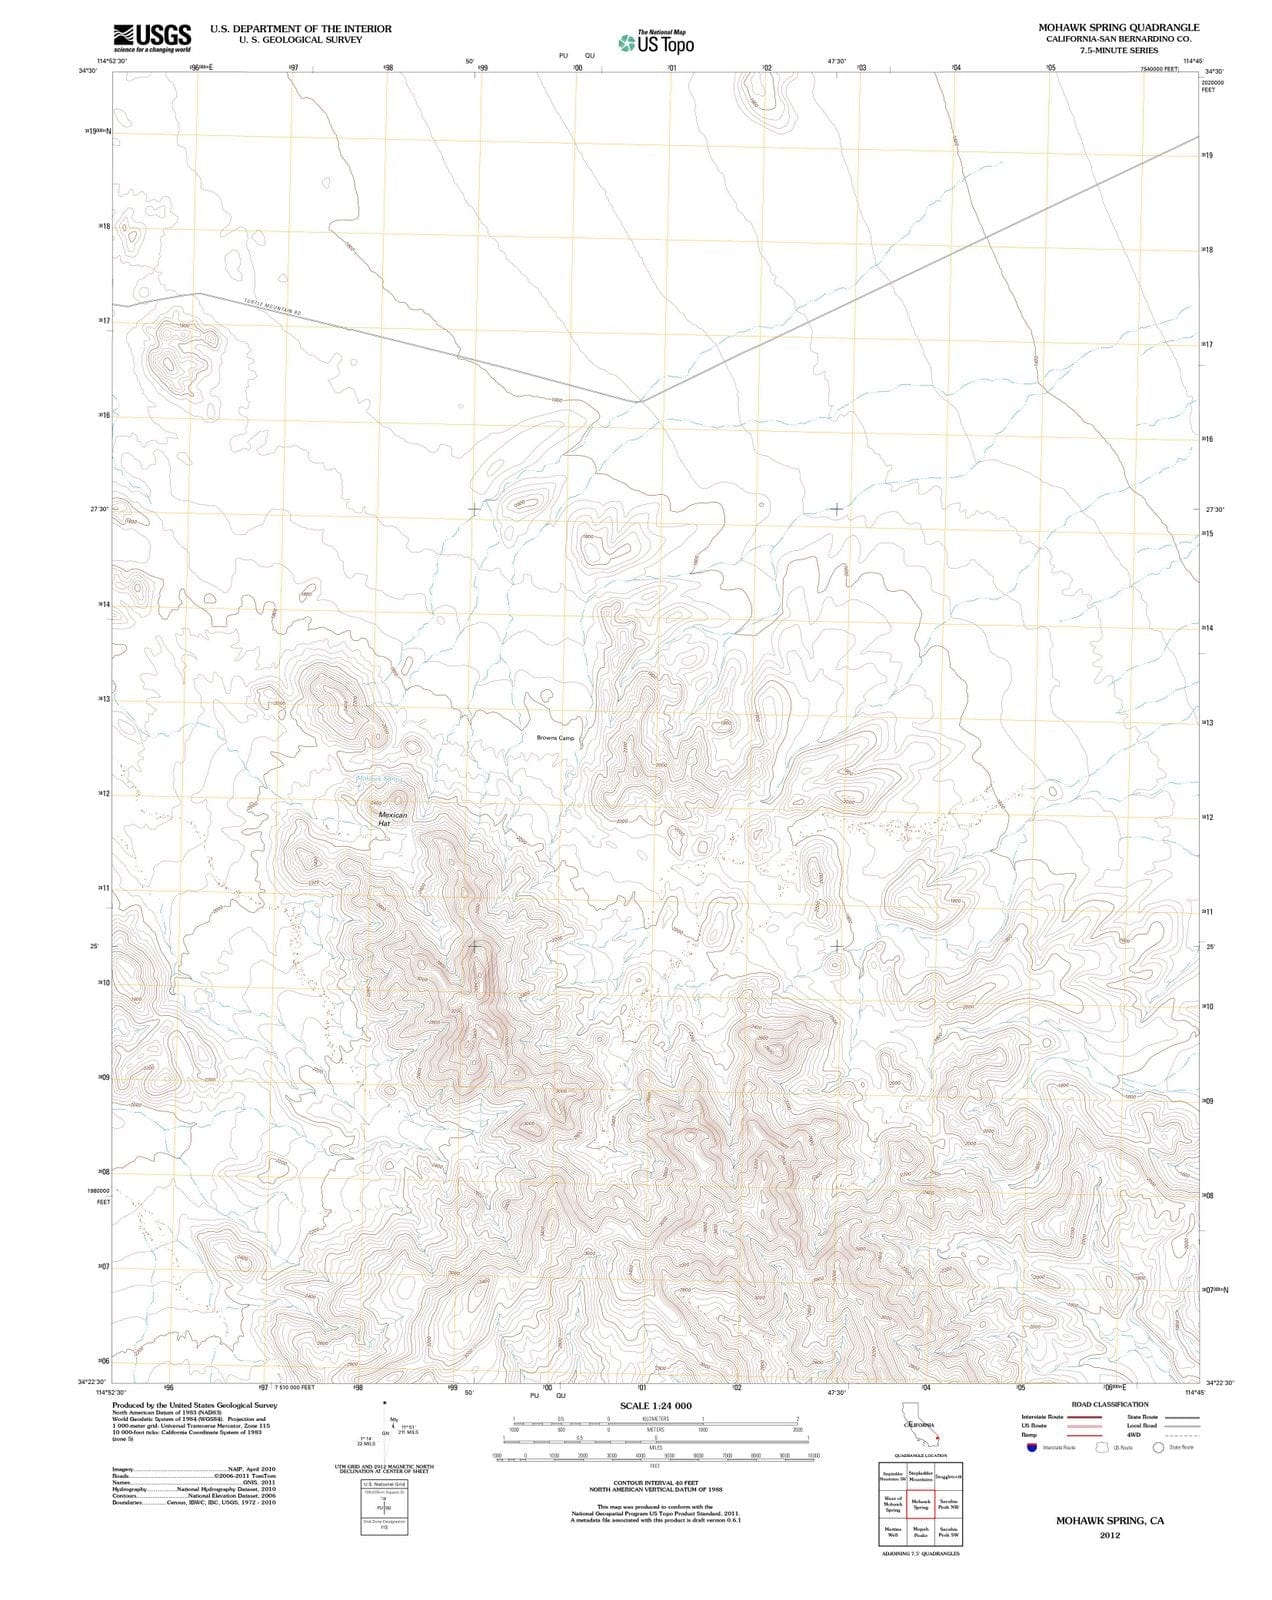 2012 Mohawk Spring, CA - California - USGS Topographic Map